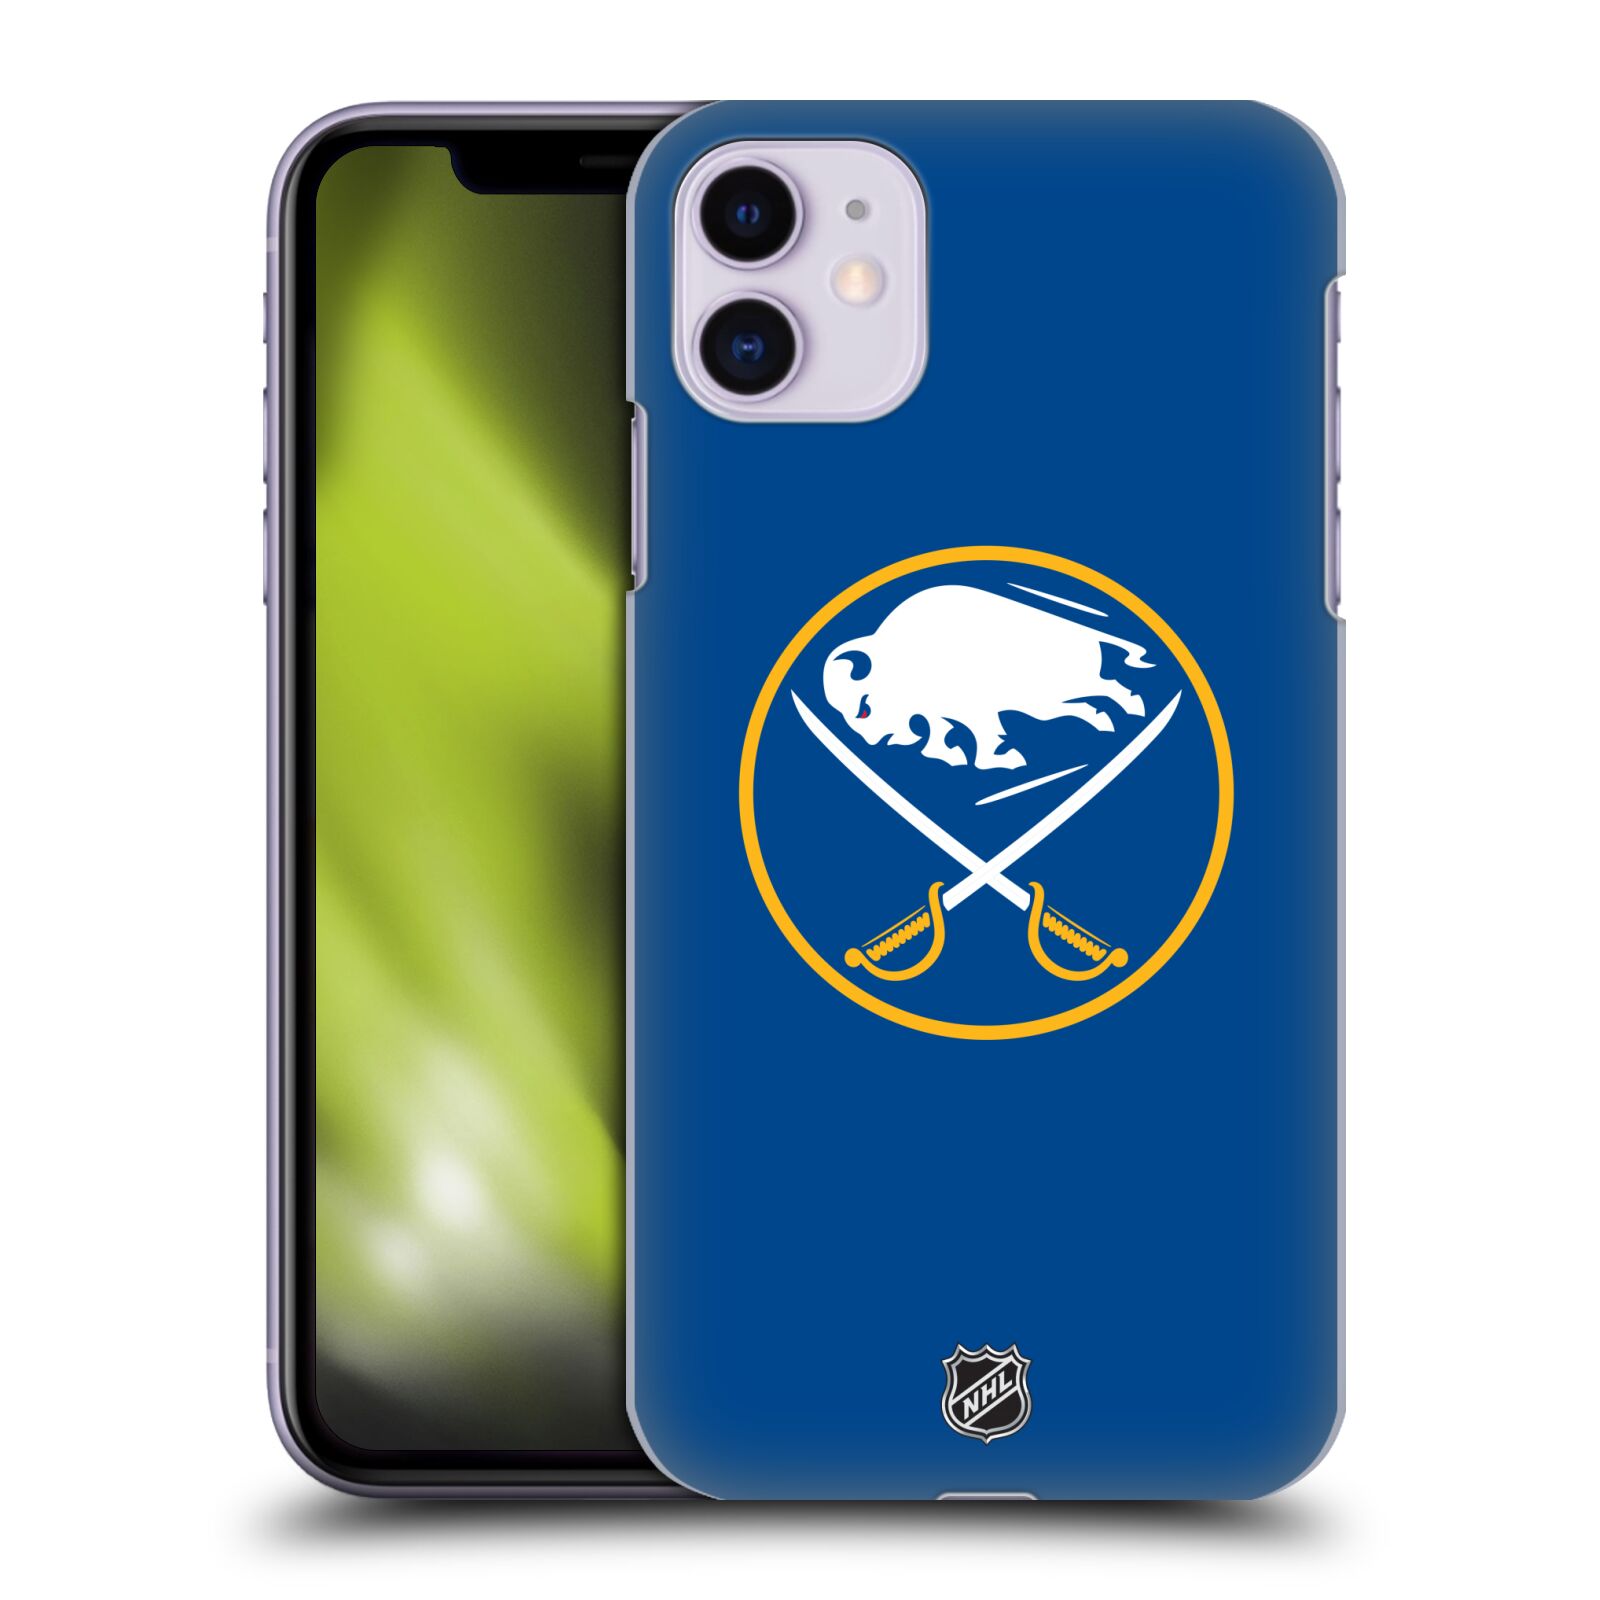 Pouzdro na mobil Apple Iphone 11 - HEAD CASE - Hokej NHL - Buffalo Sabres - modré pozadí